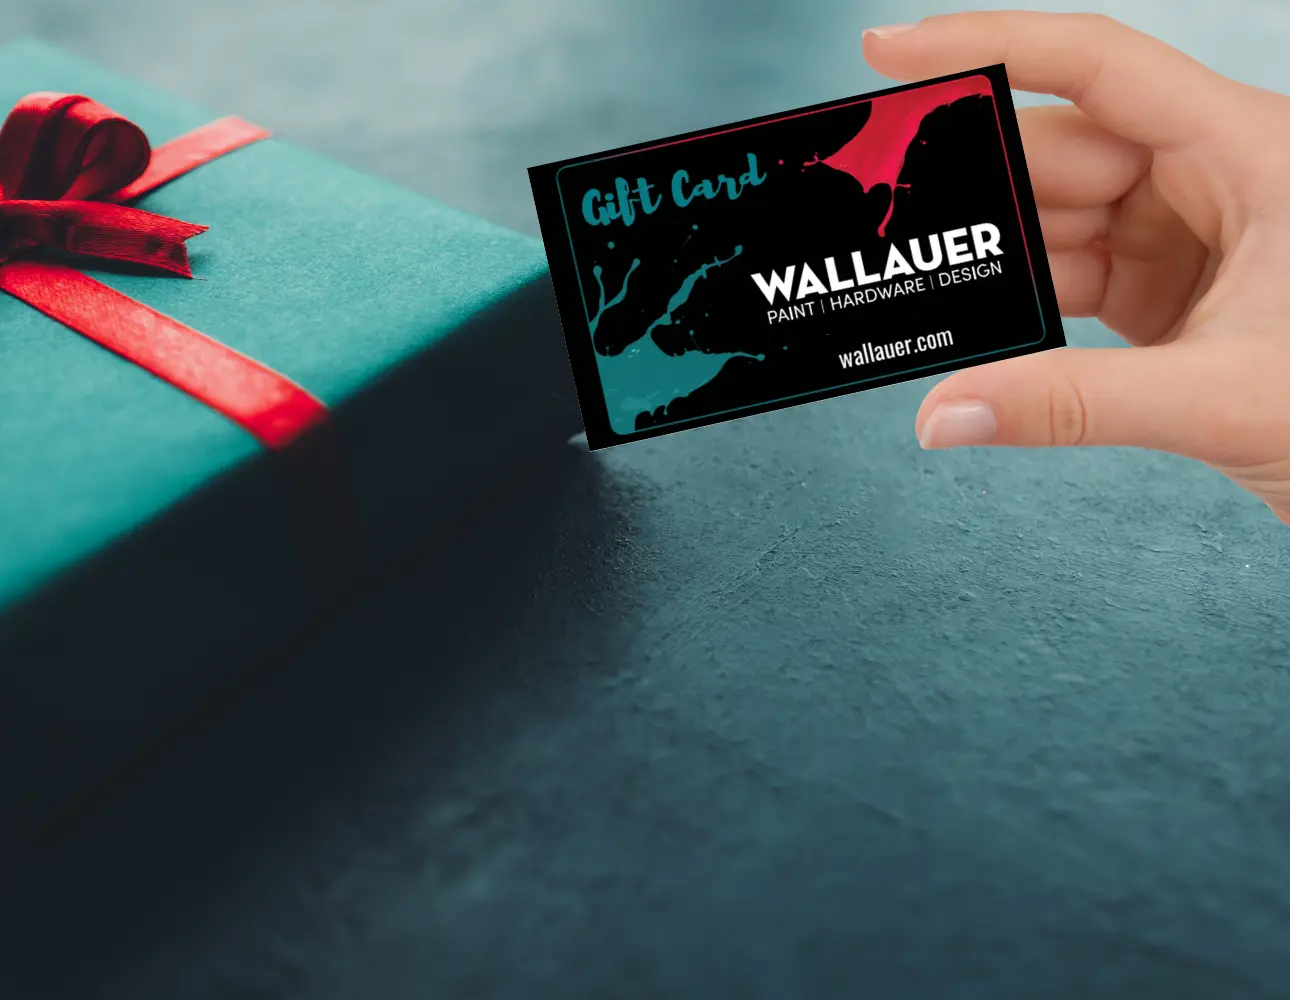 wallauer gift card